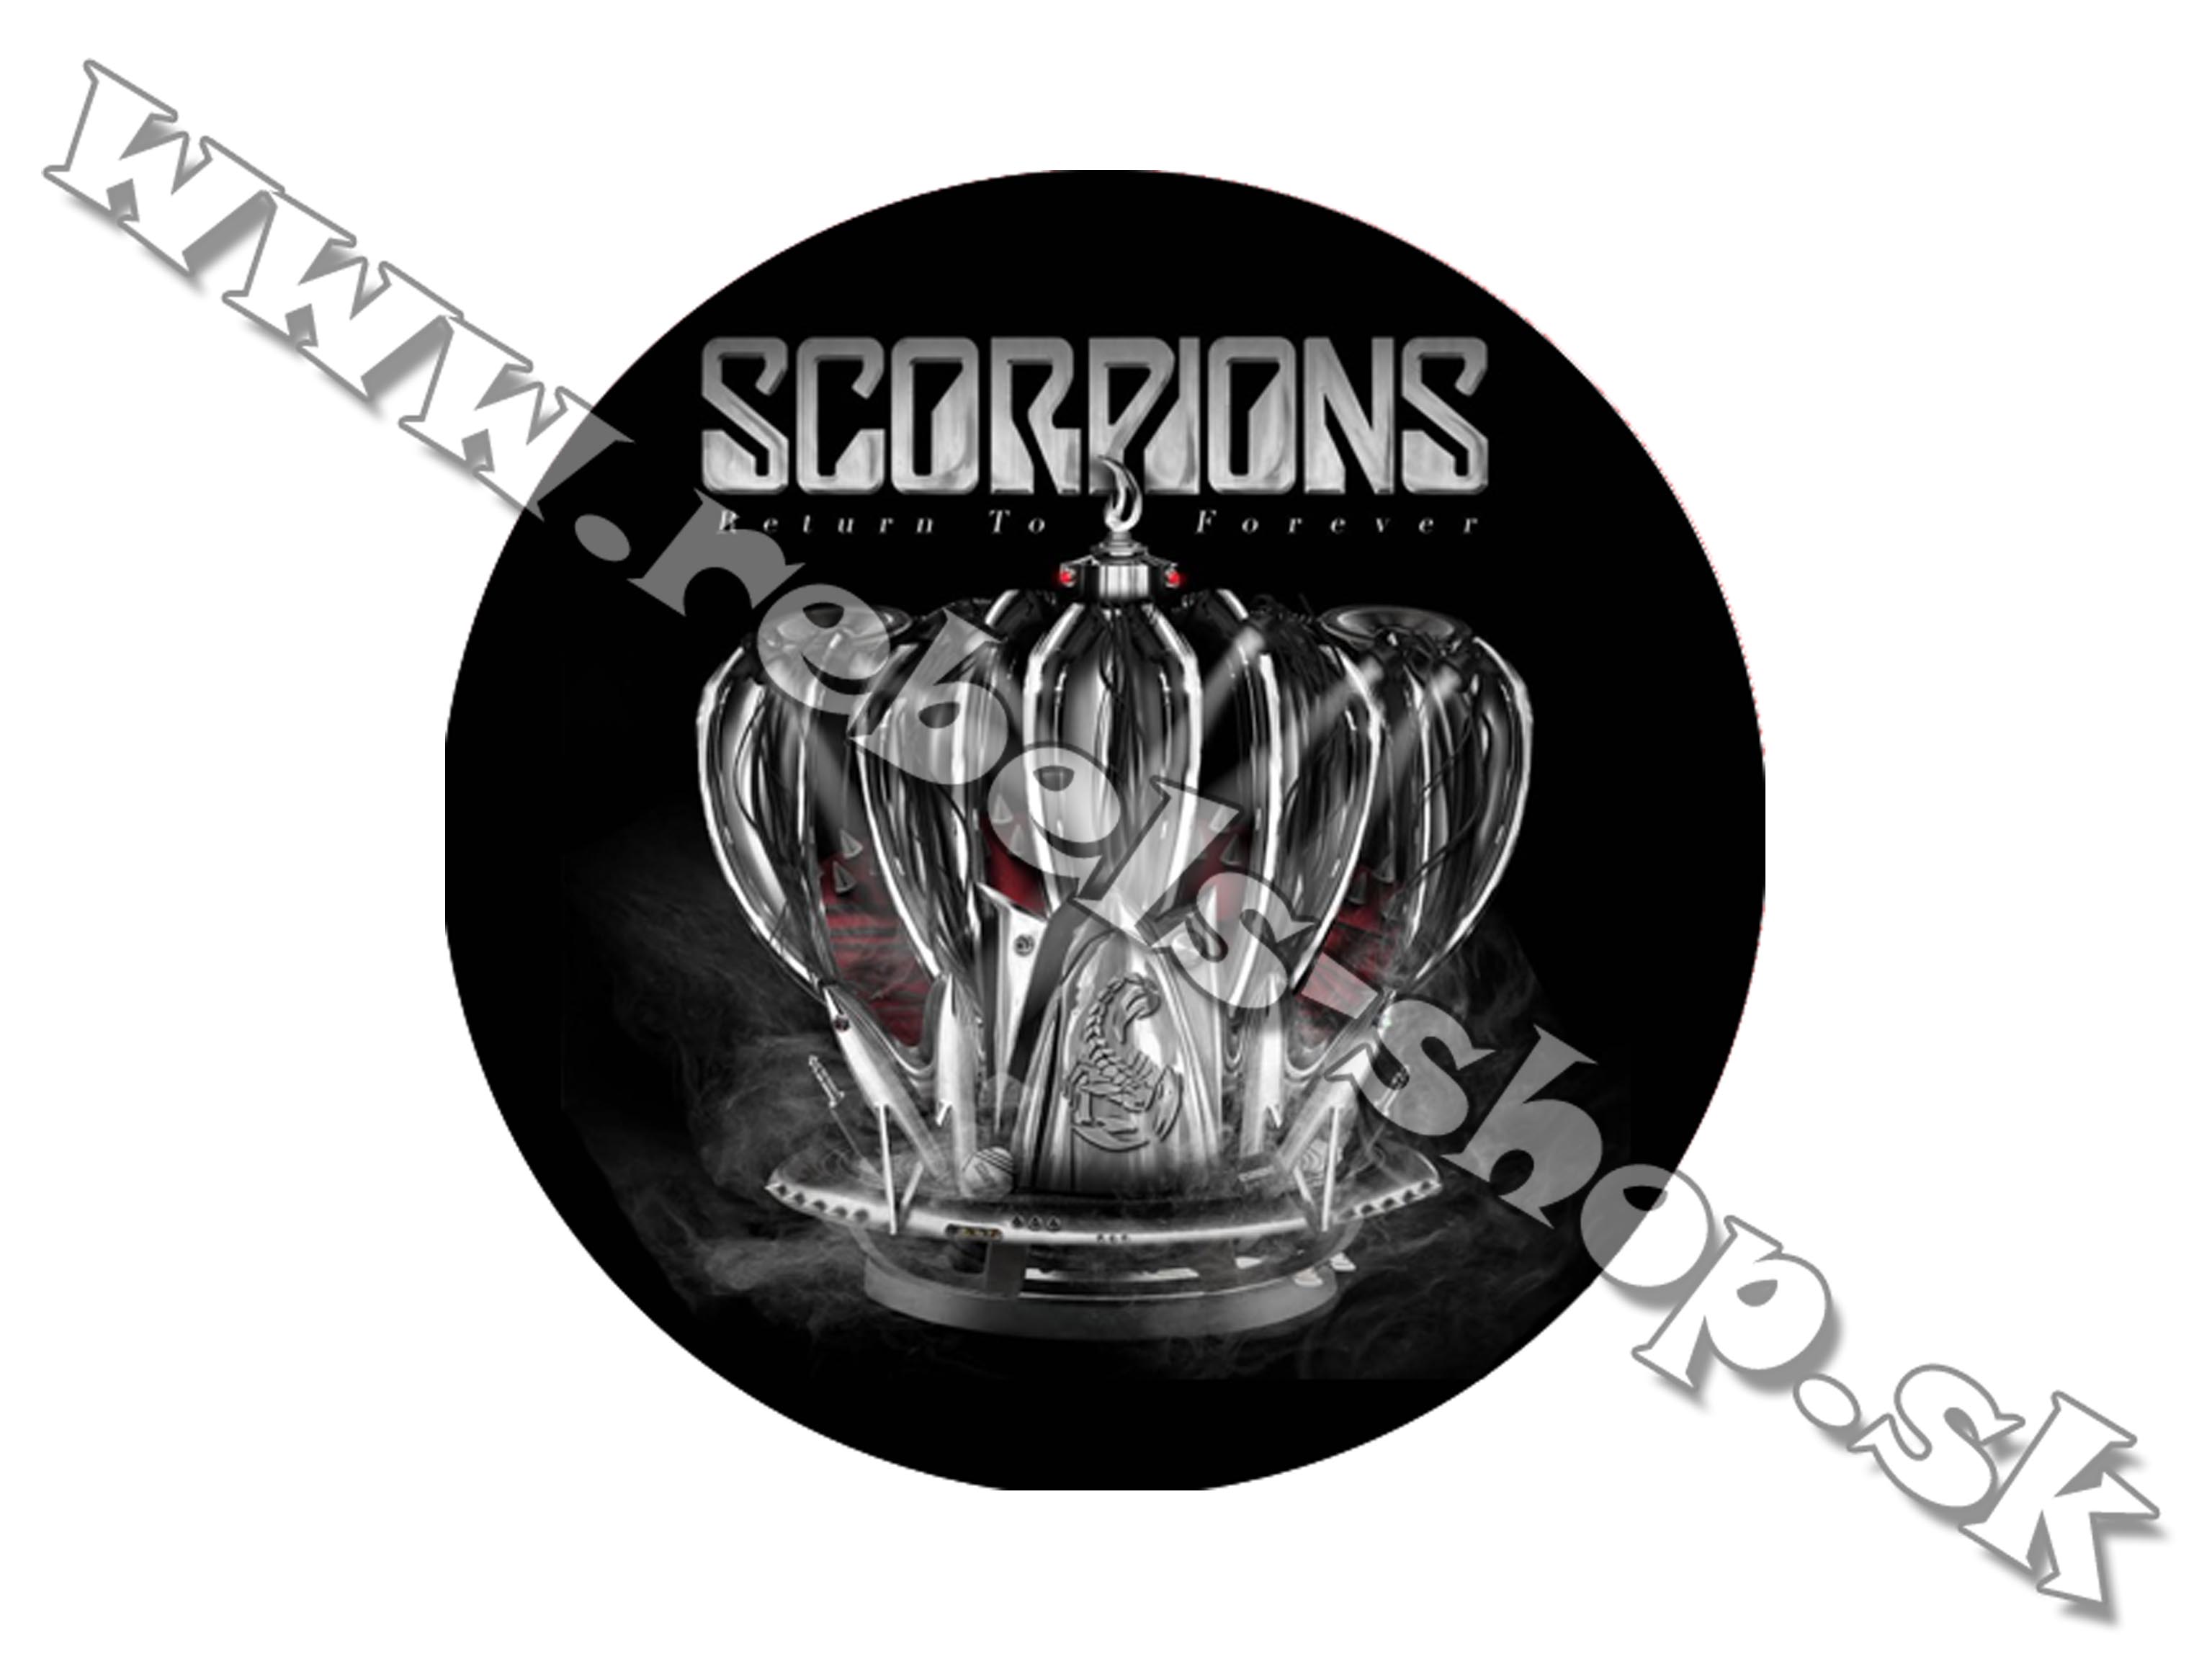 Odznak "Scorpions"